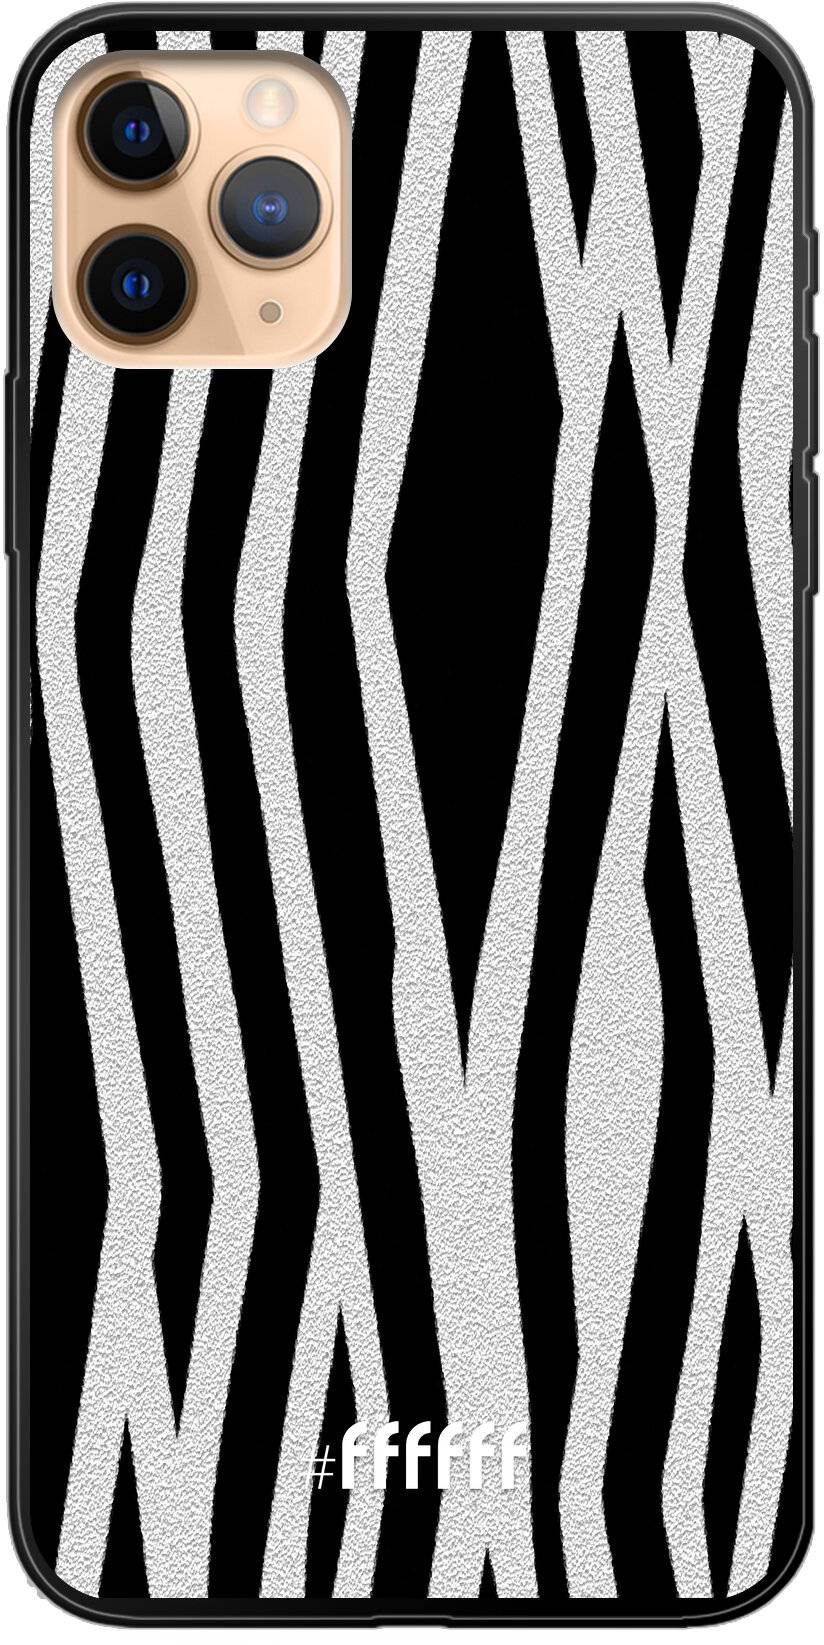 Zebra Print iPhone 11 Pro Max